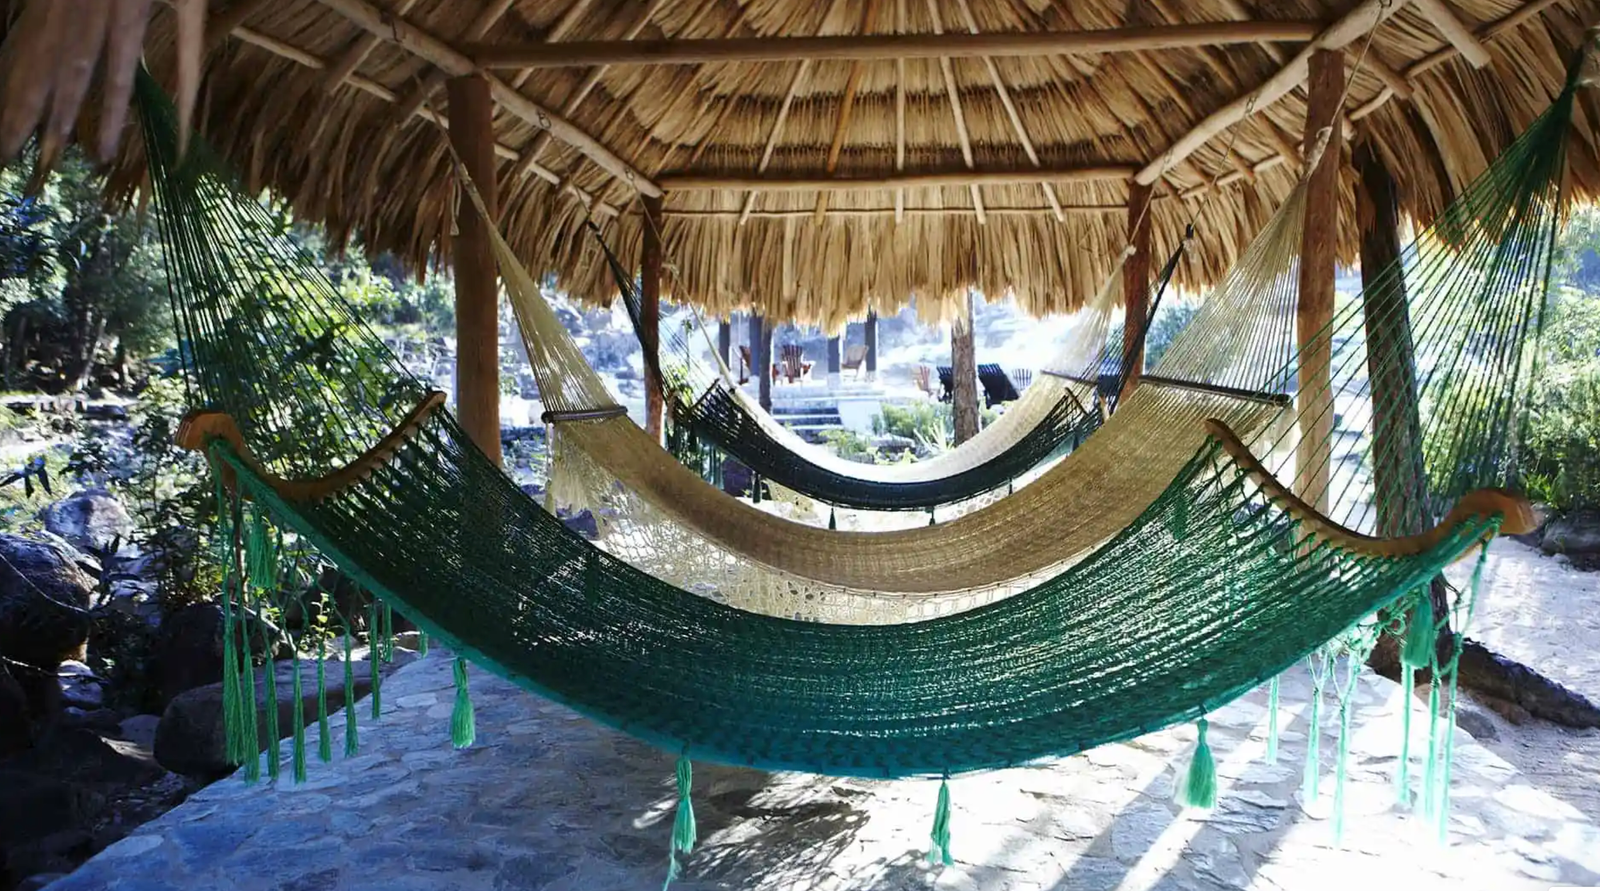 Gaia Riverlodge - Belize Honeymoon Resort